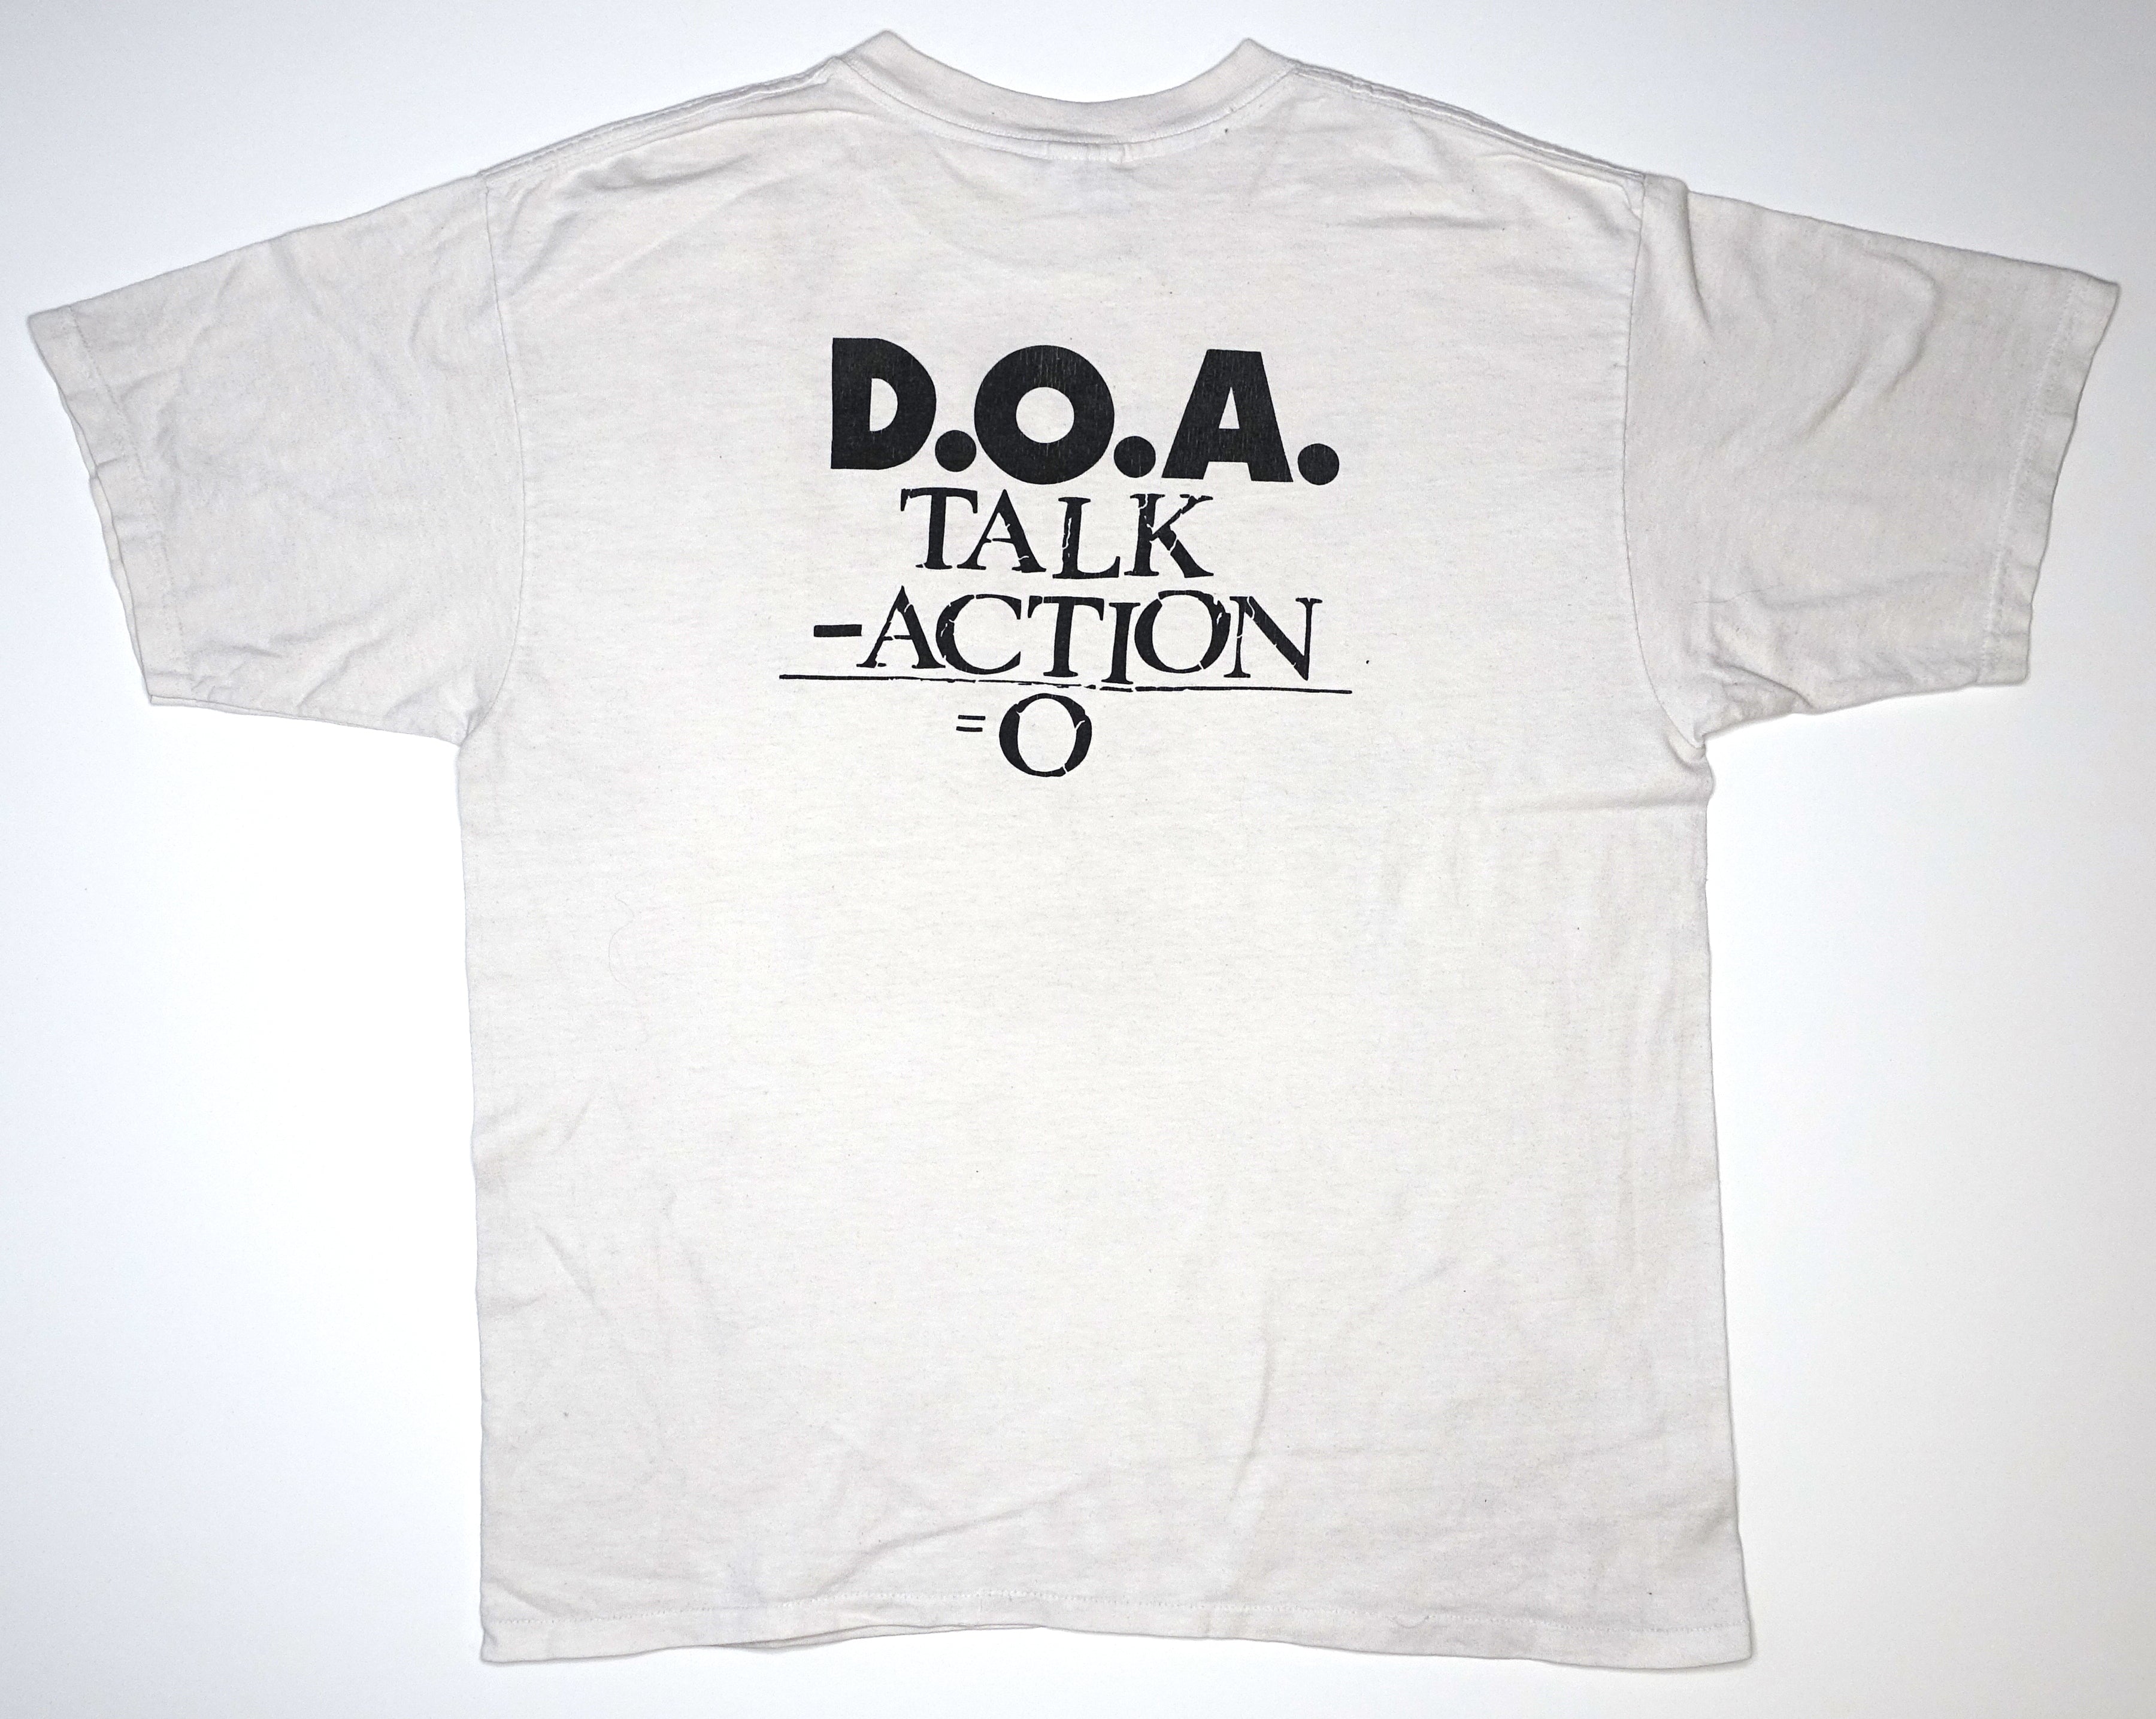 D.O.A. - Talk-Action=0 Tour Shirt Size Large